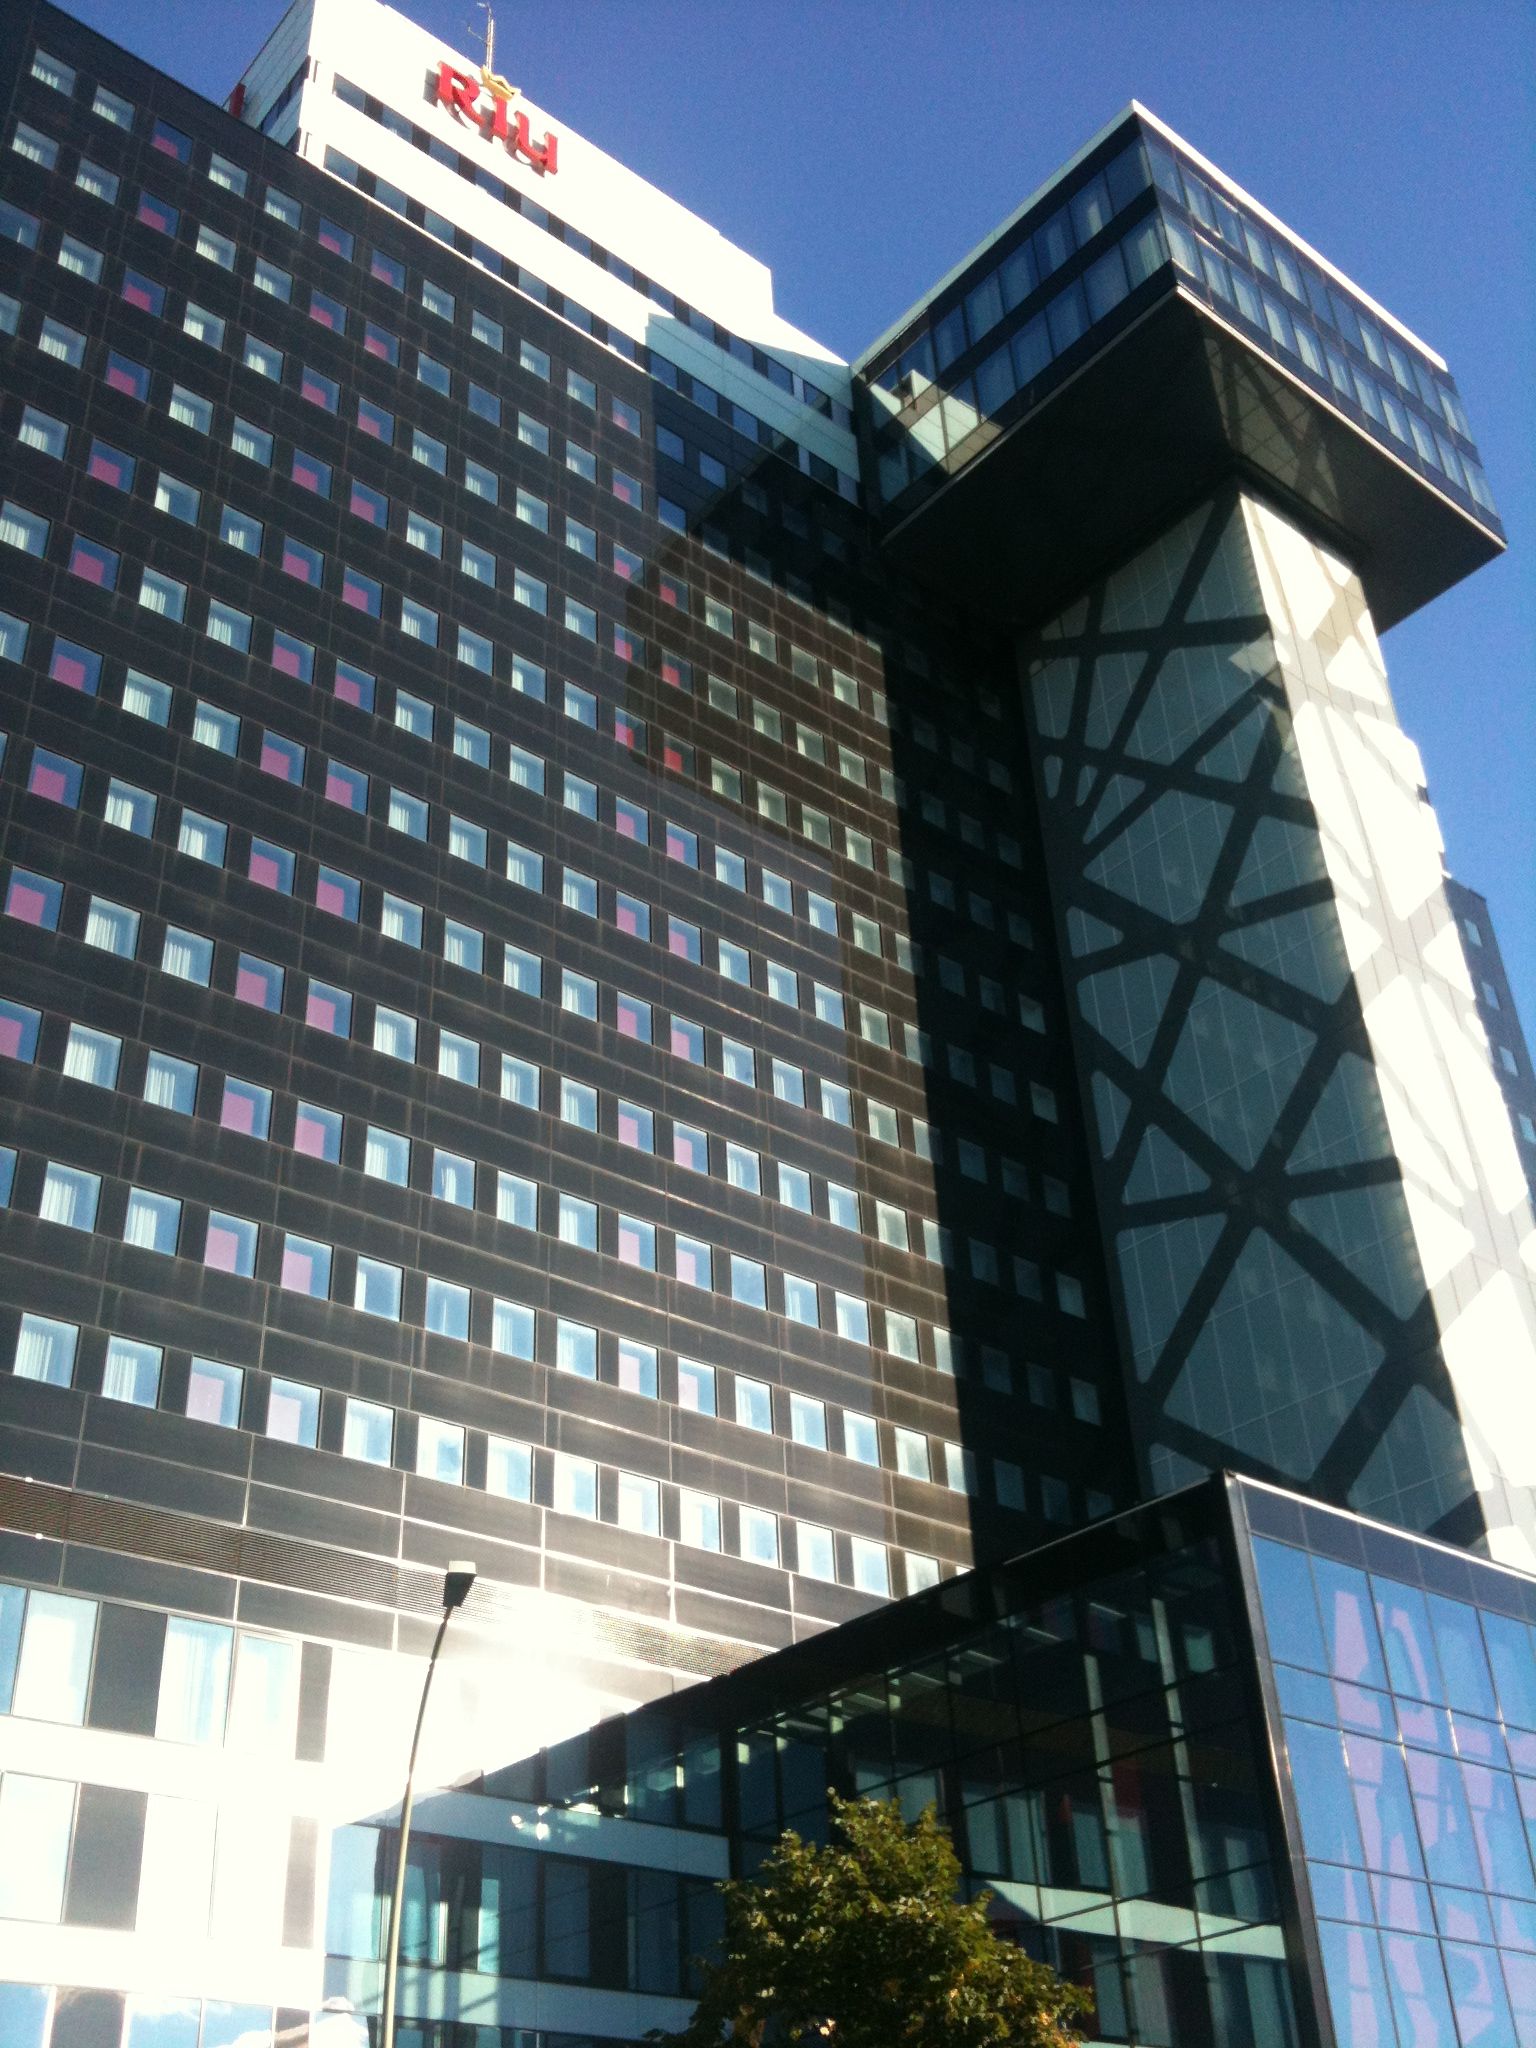 Riu Plaza Berlin - Fassade